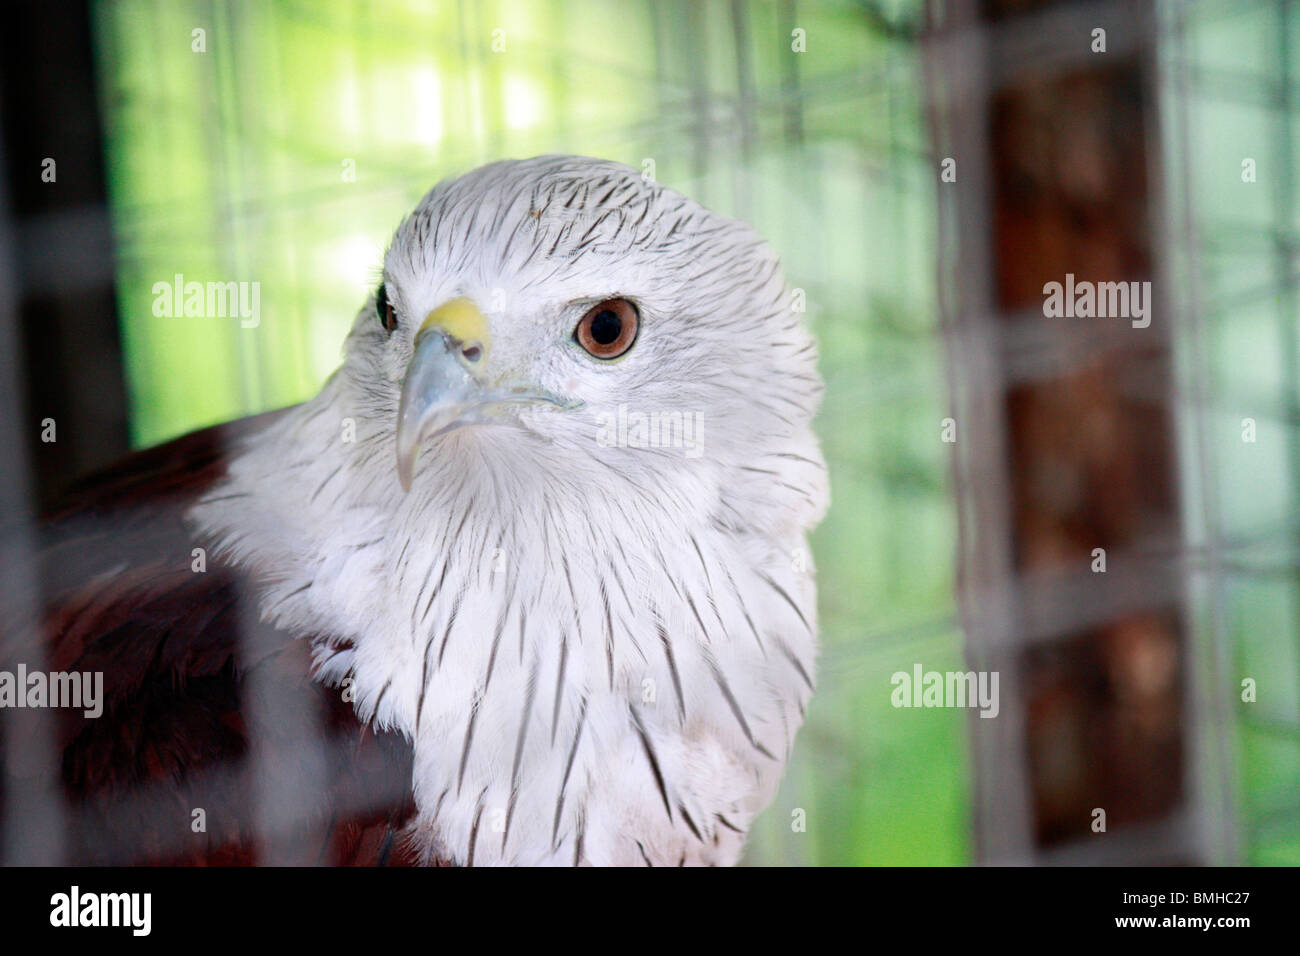 Adler in Käfig-König der Vögel Nahaufnahme Stockfoto